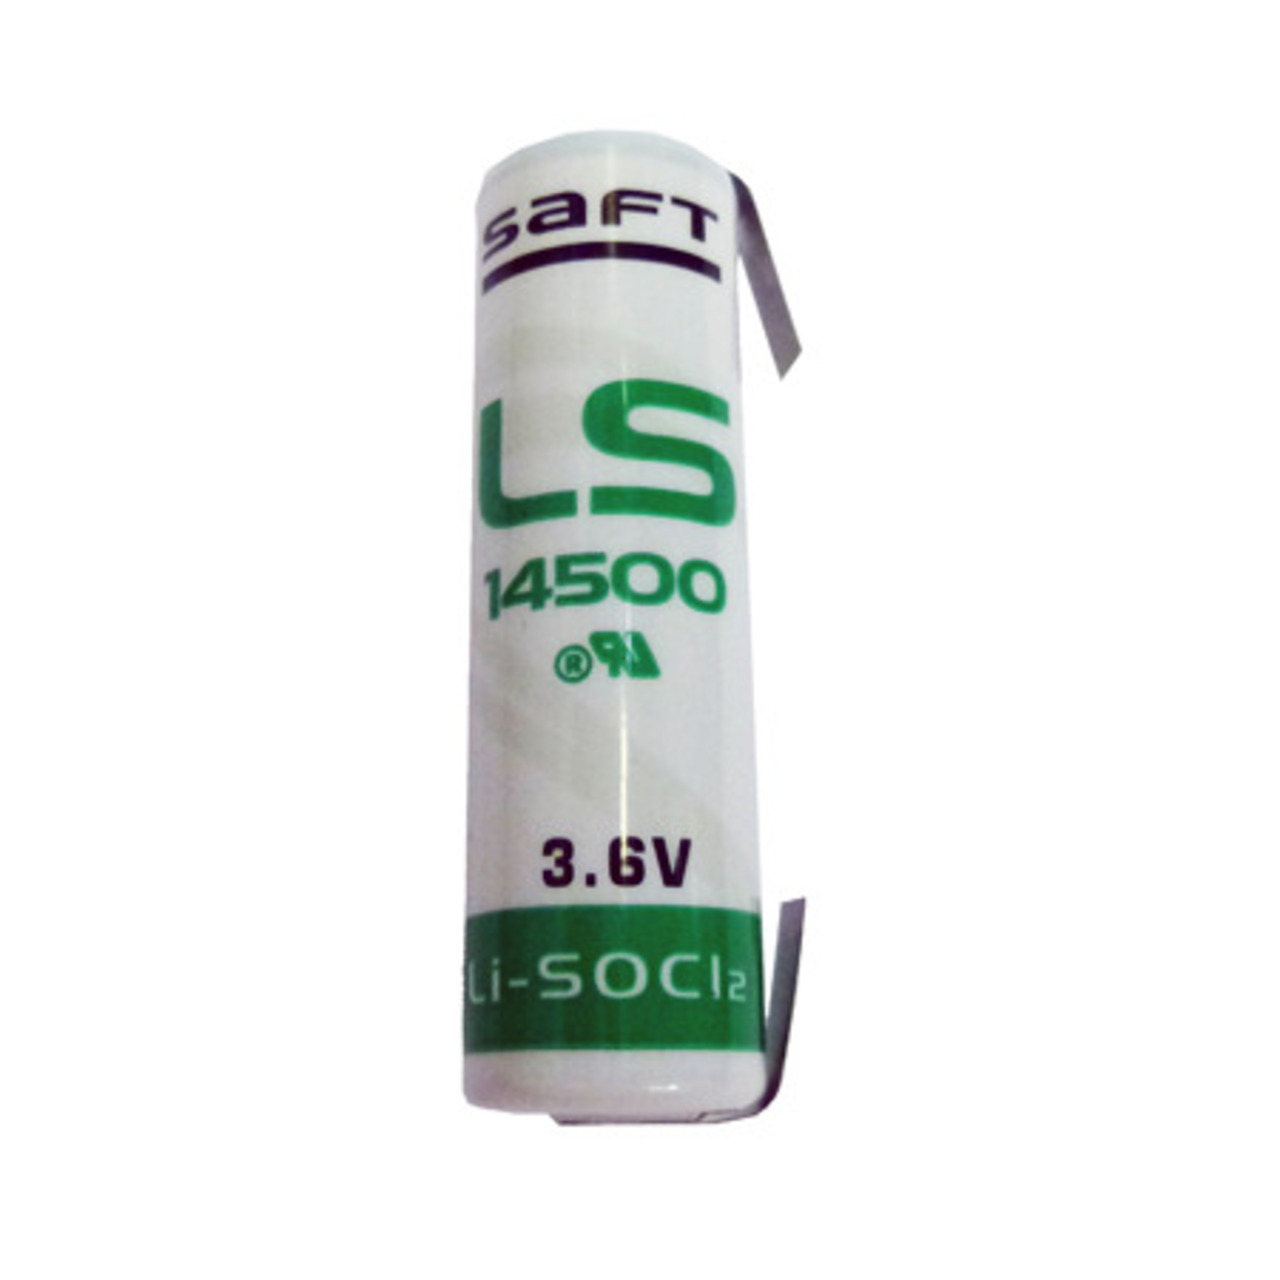 Saft Lithium Batterie mit Ltfahne LS-14500CNR- Mignon AA- 3-6 V- 2600 mAh unter Stromversorgung